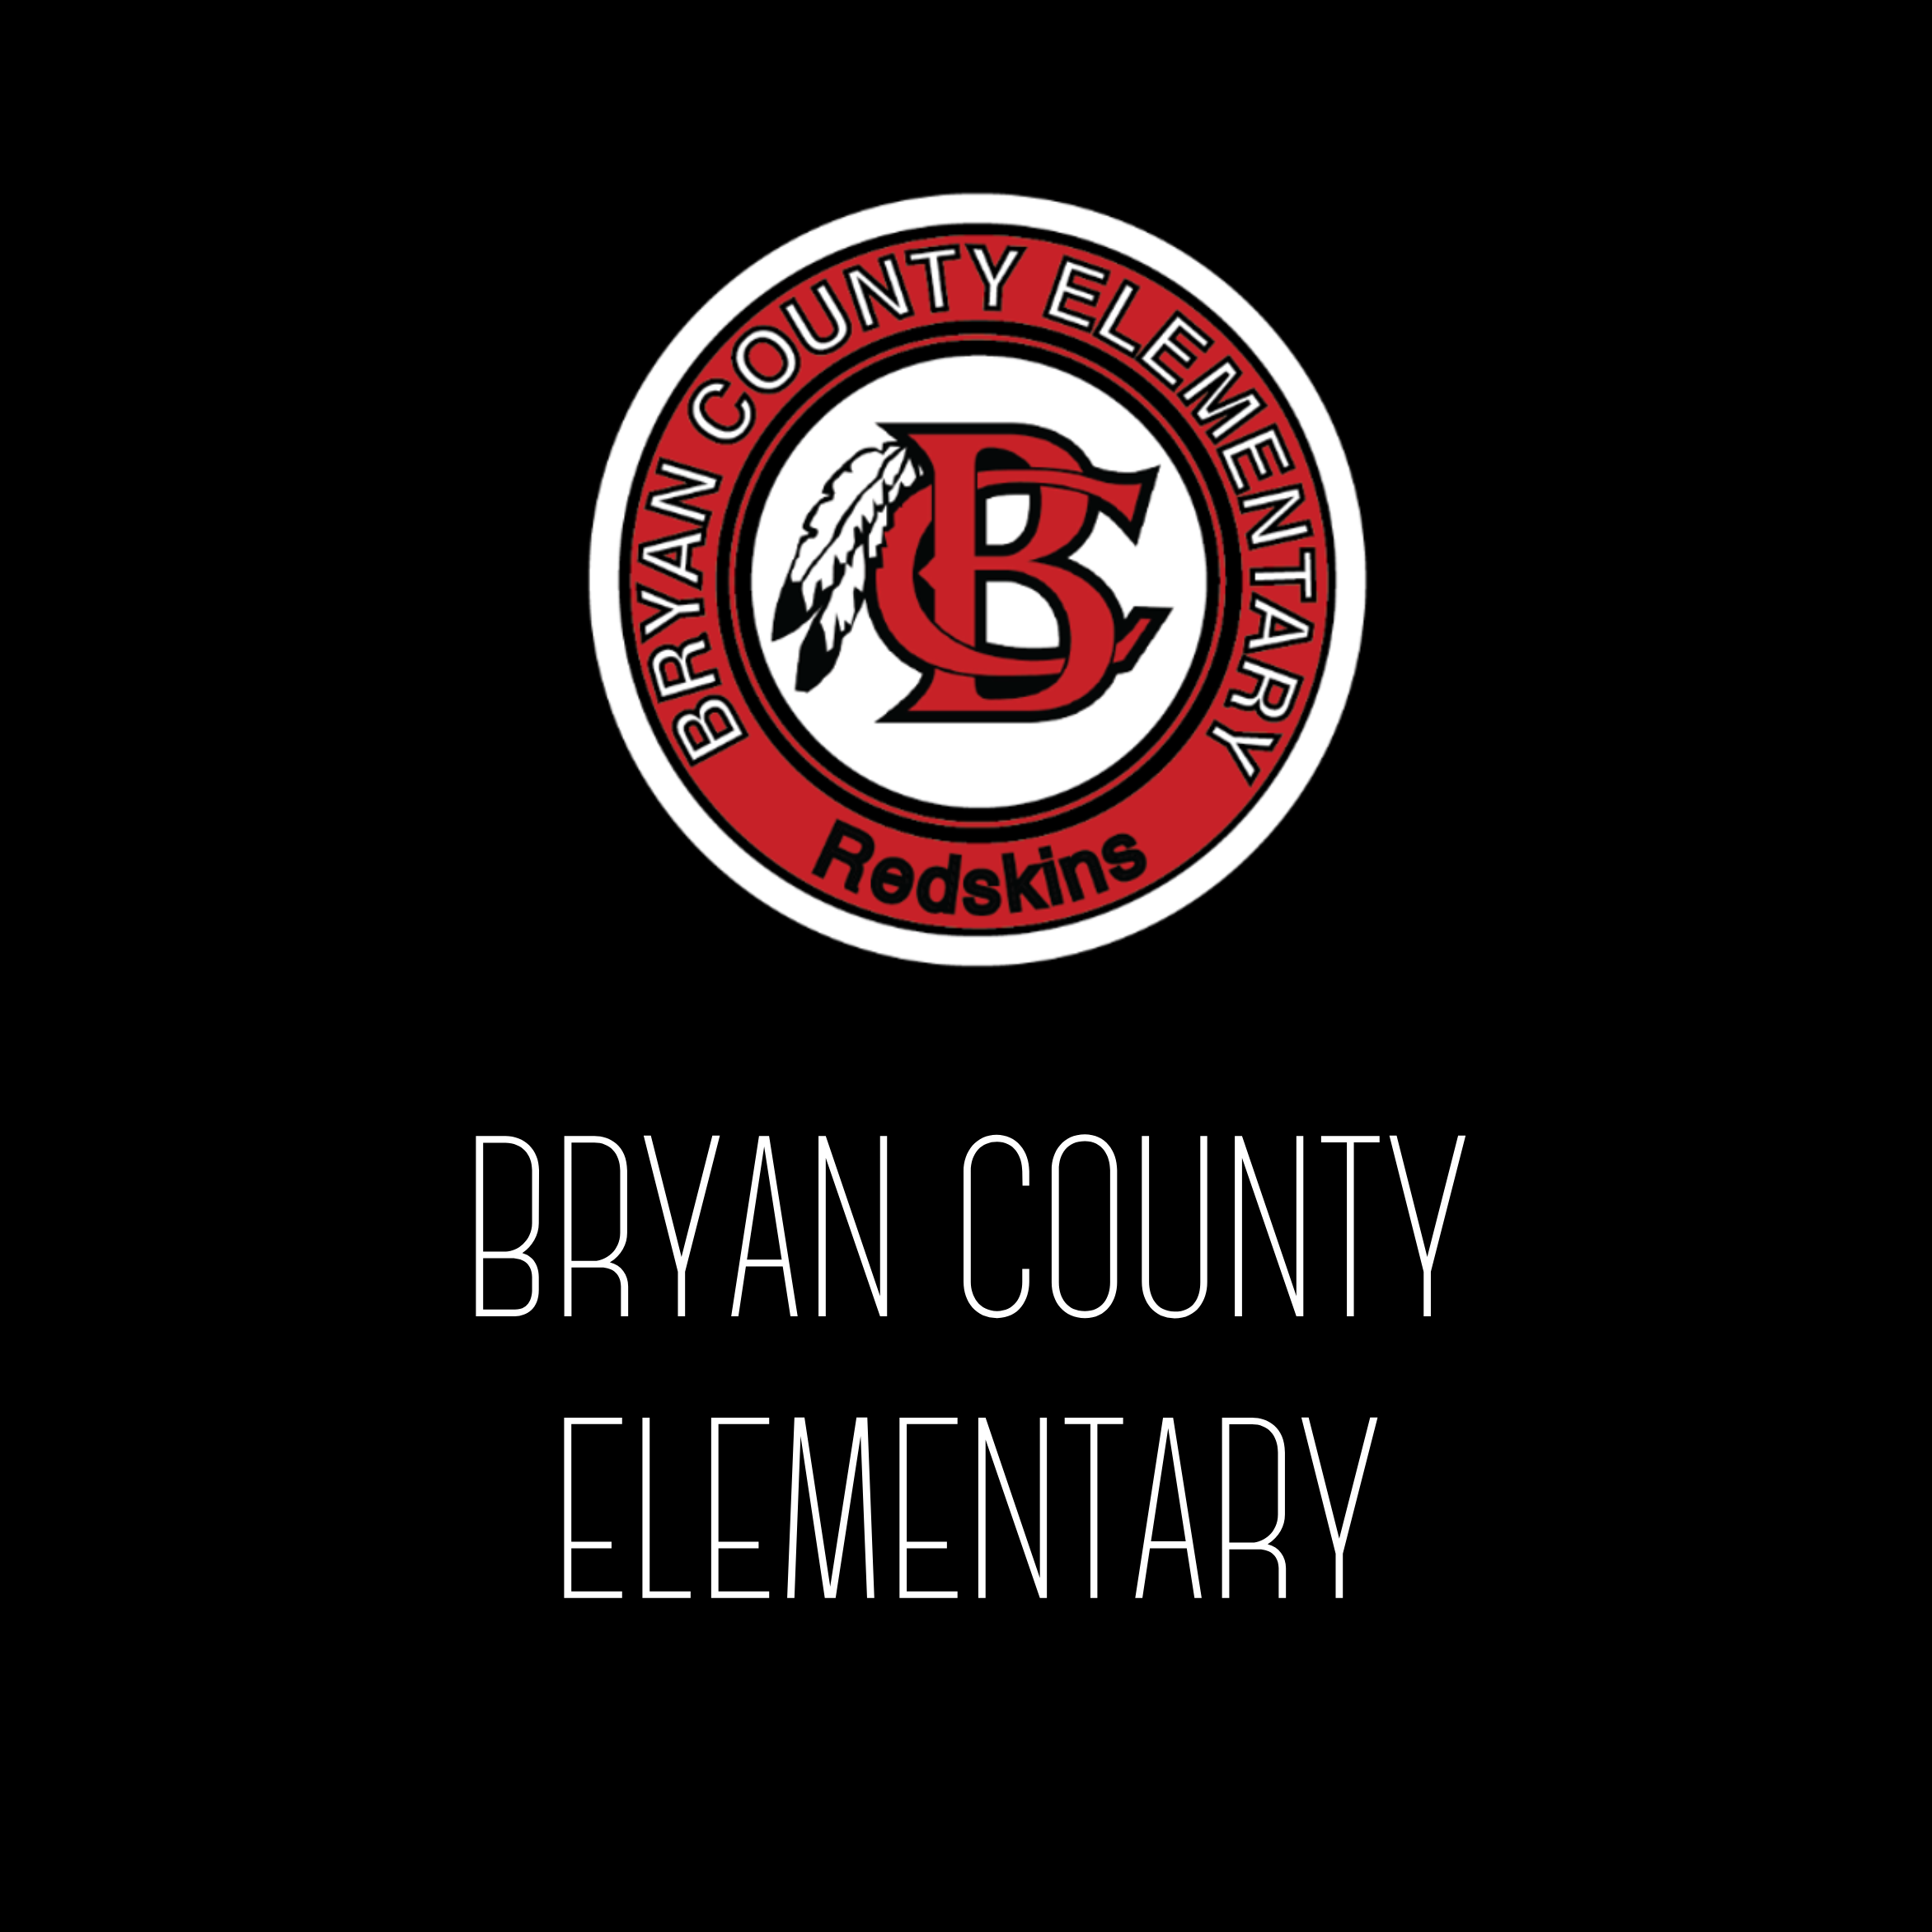 Bryan County Elementary